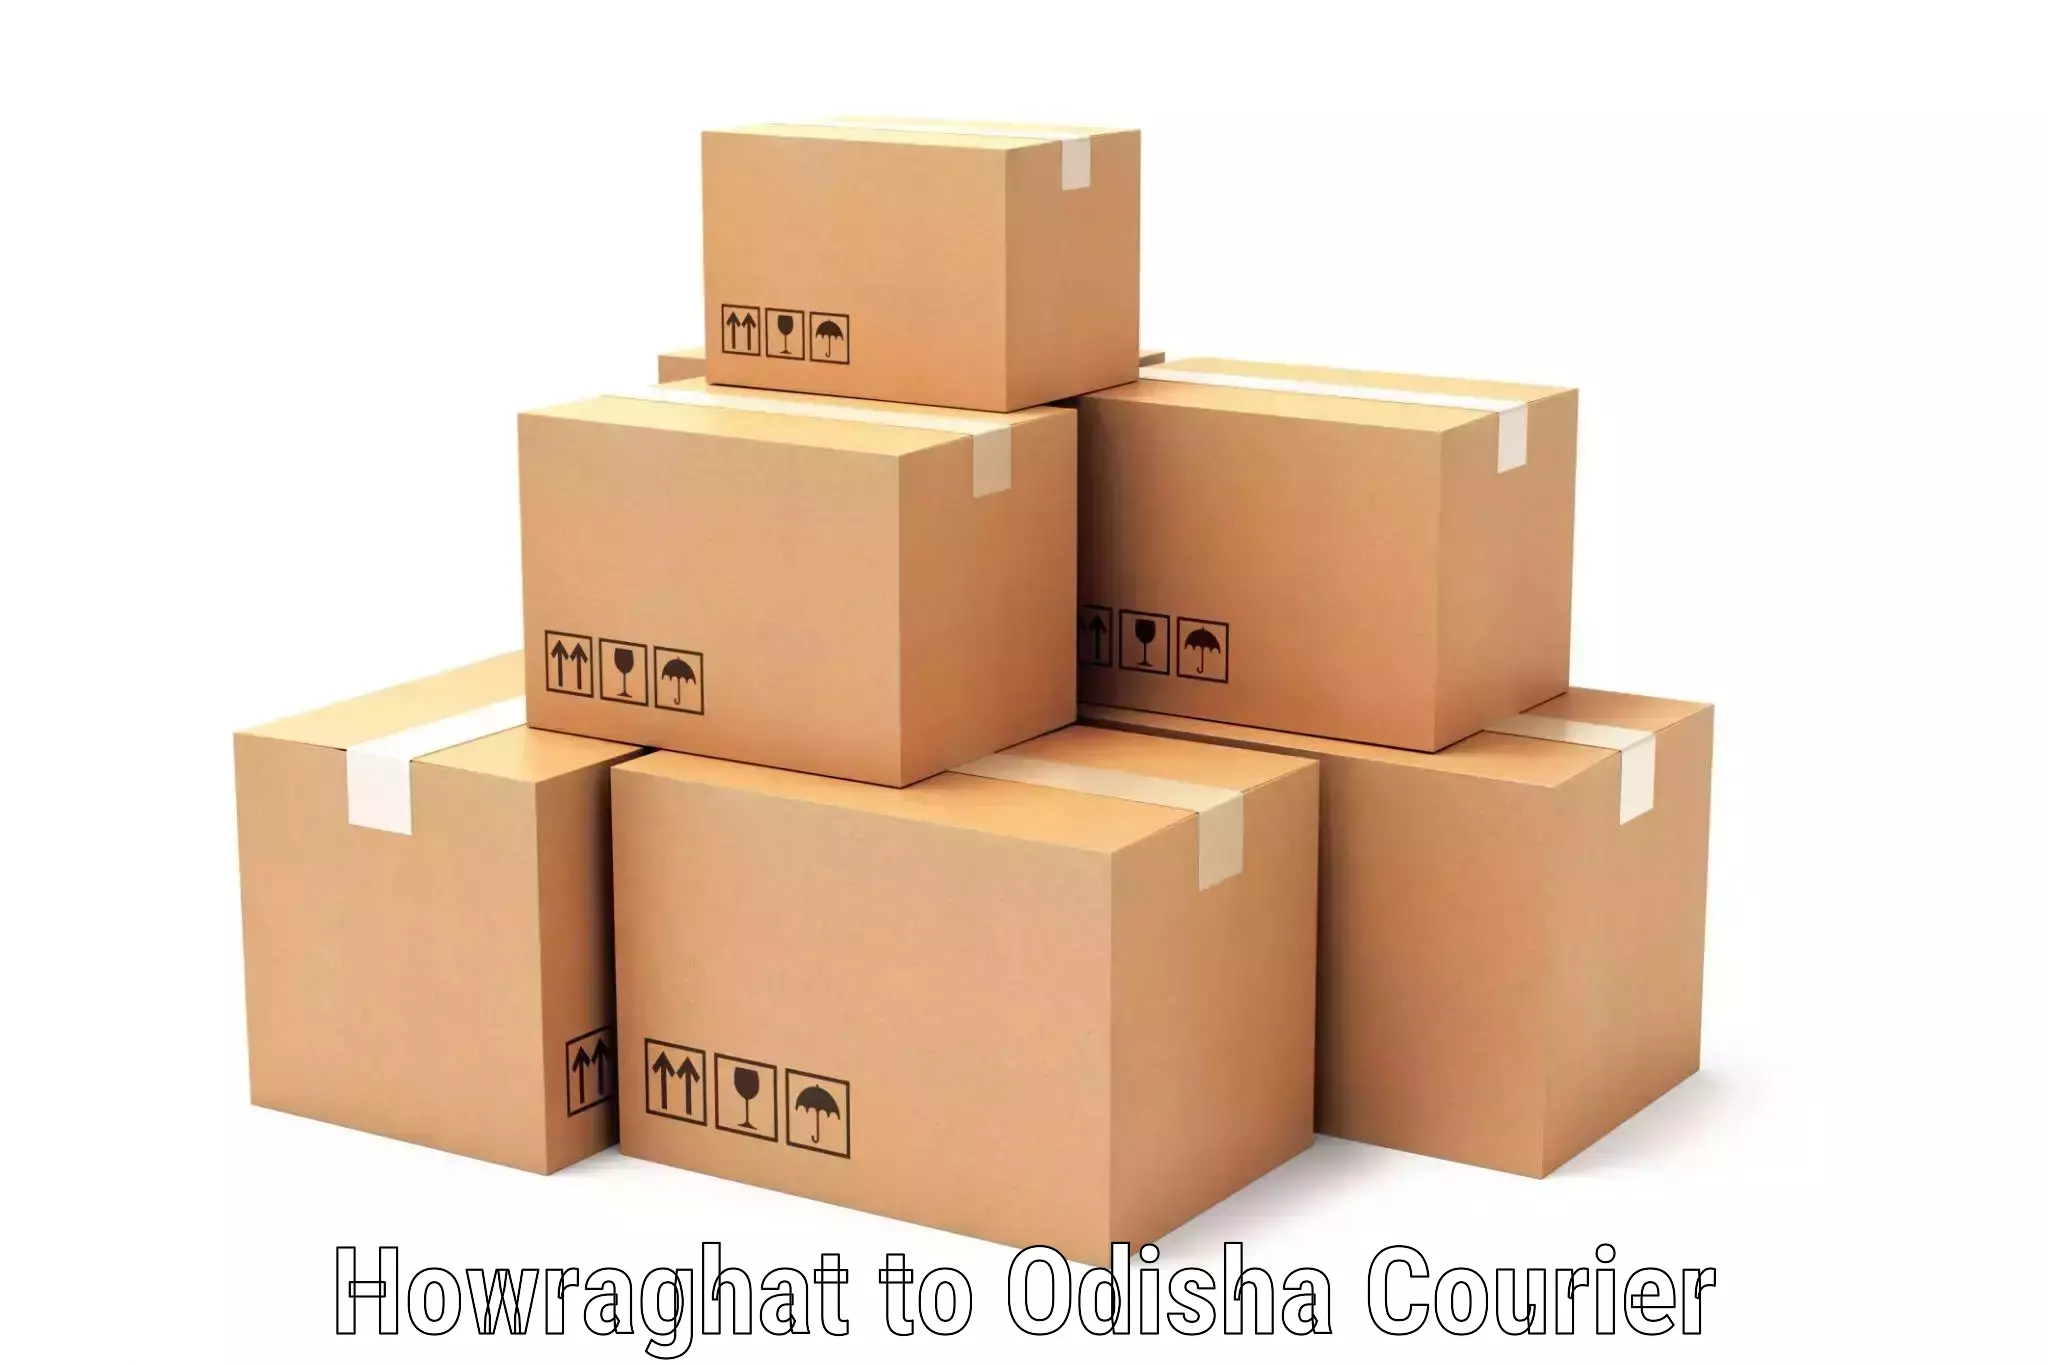 High-capacity parcel service Howraghat to Ghuntagadia